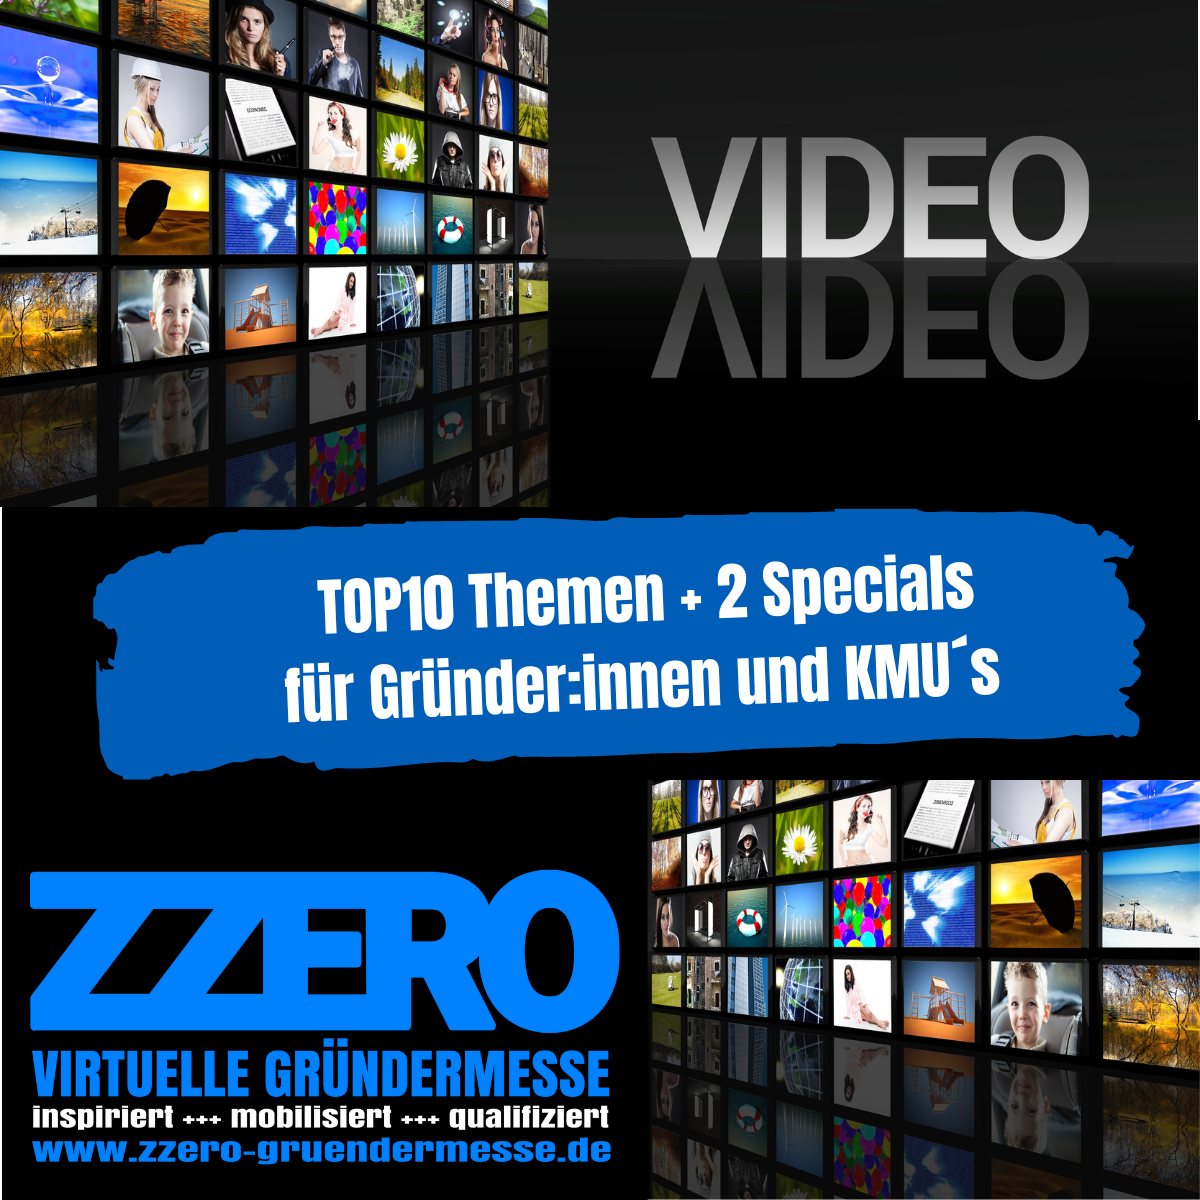 ZZERO Videobundle